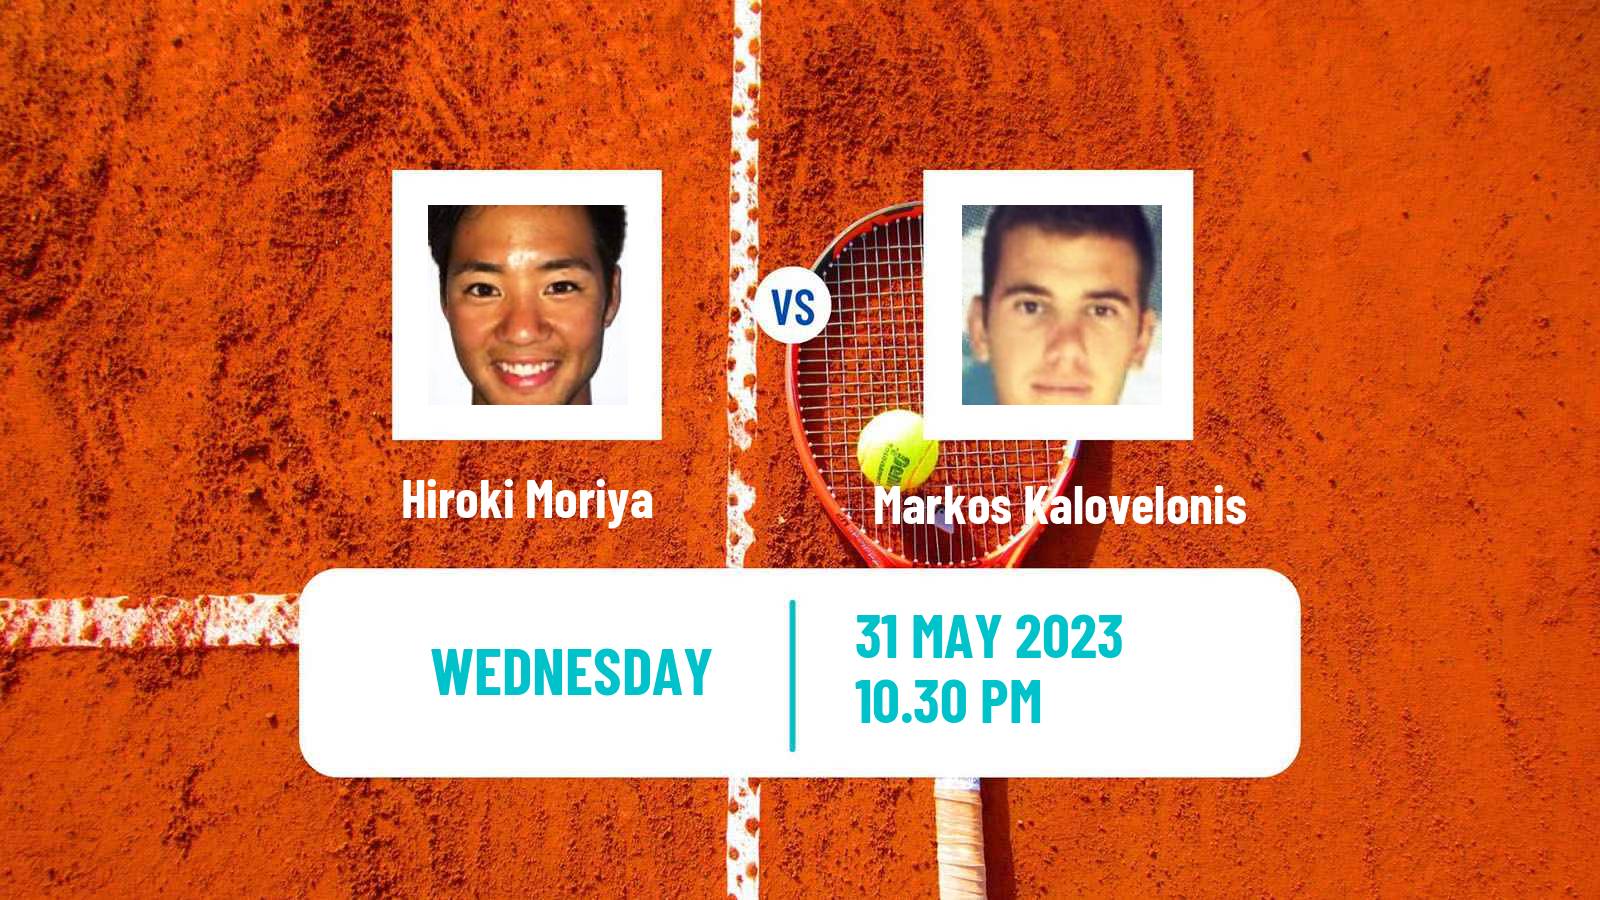 Tennis ITF M25 Jakarta 4 Men Hiroki Moriya - Markos Kalovelonis